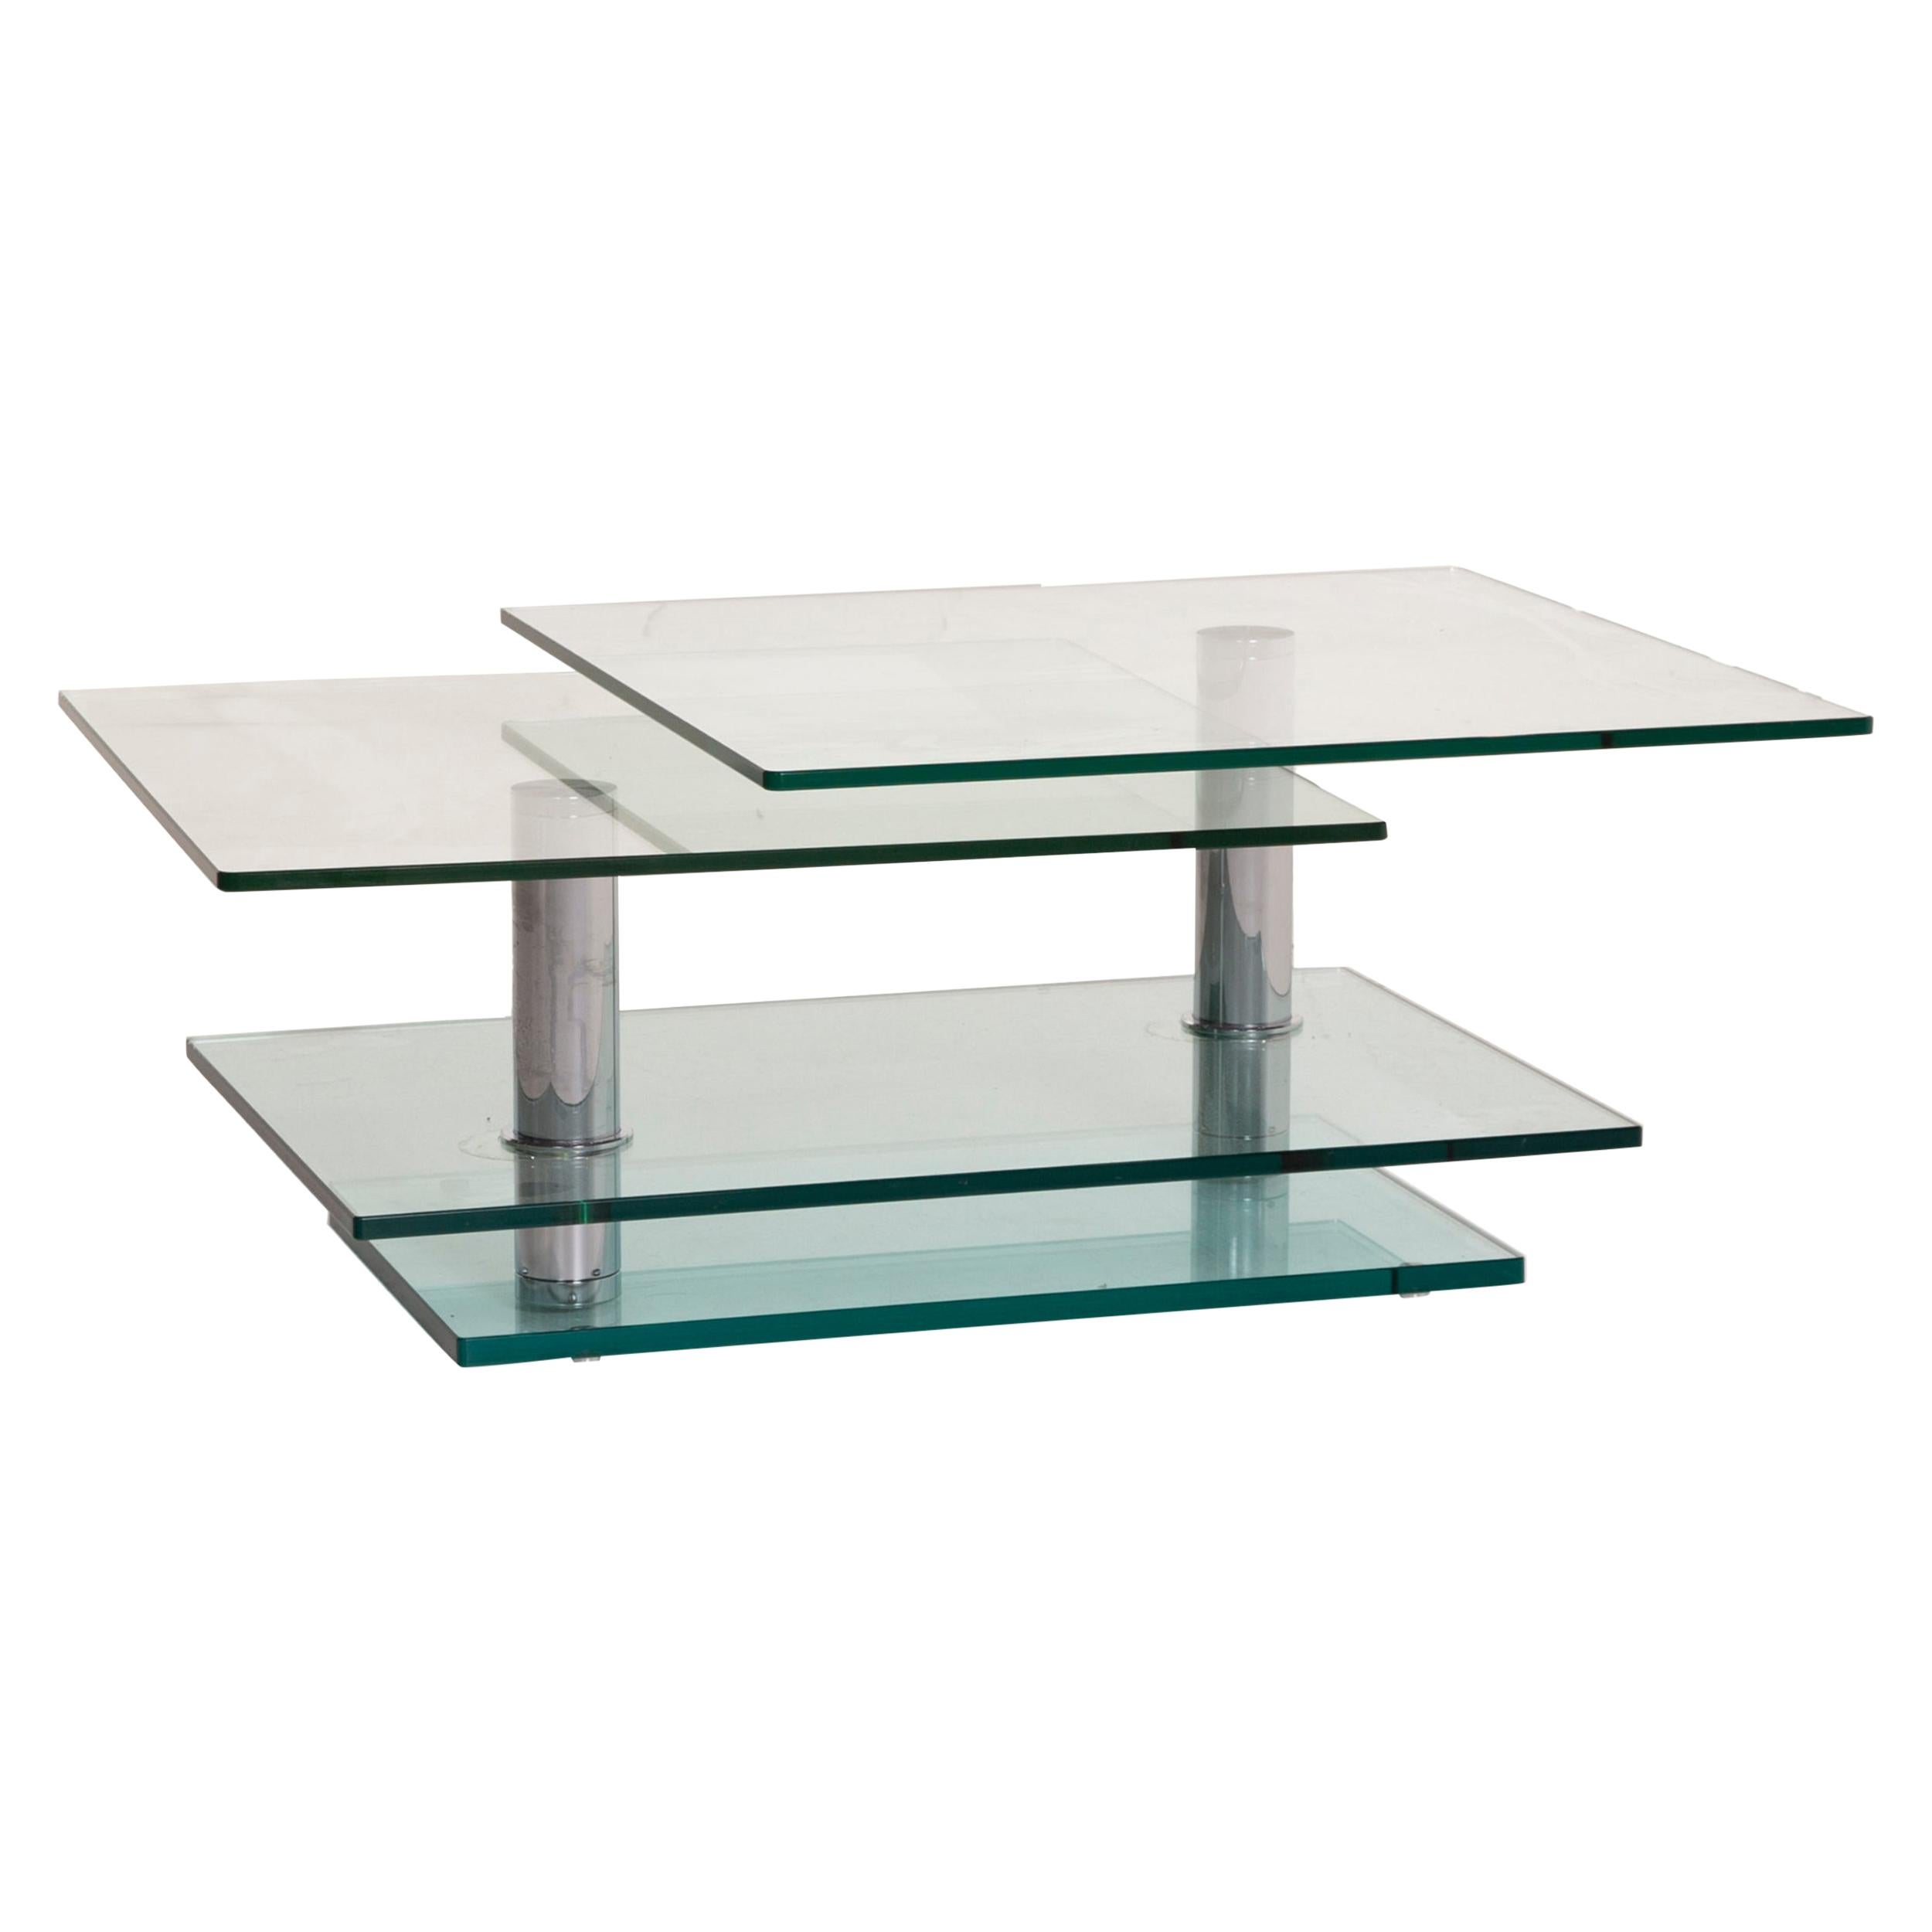 Ronald Schmitt K500 Glass Table Coffee Table Chrome Function For Sale